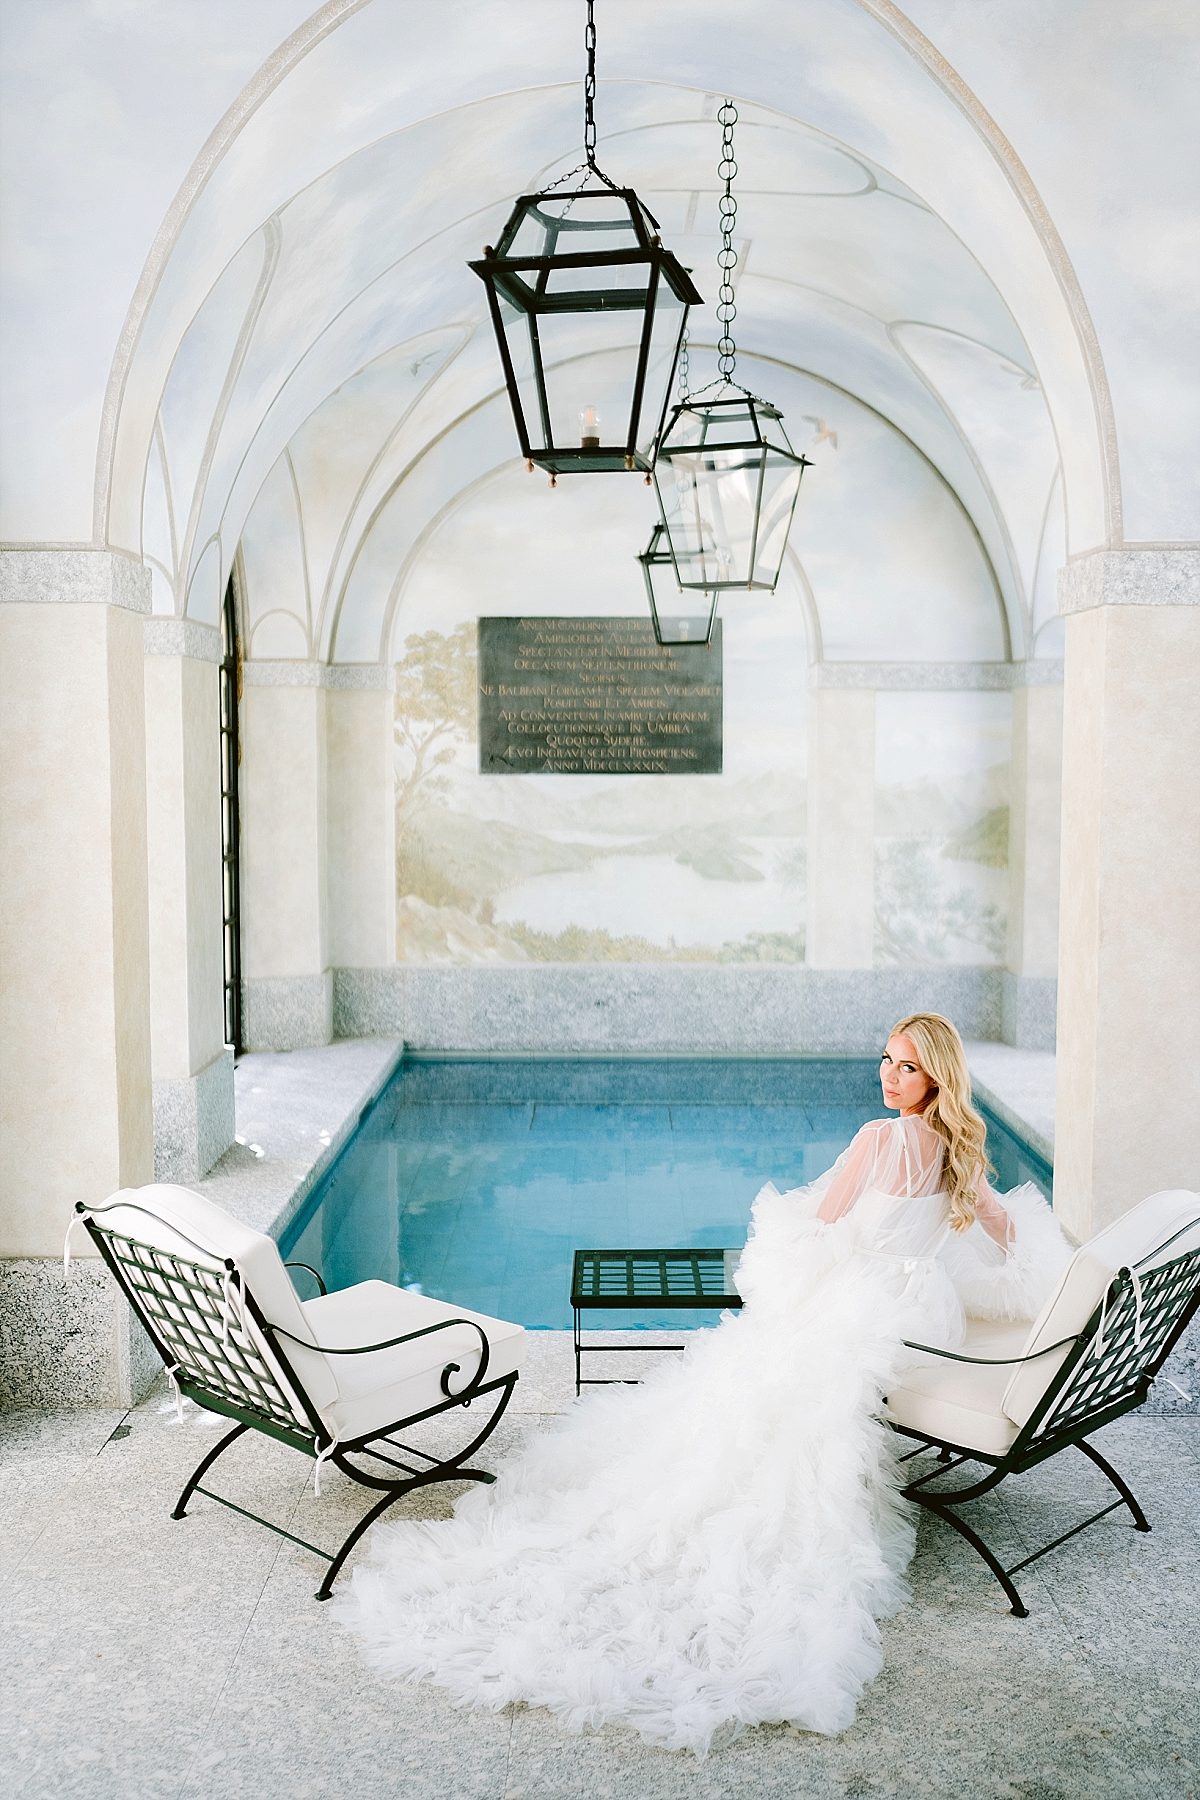 Villa Balbiano Lake como
Luxury wedding 
Photographer lake como 
Bride near the pool 